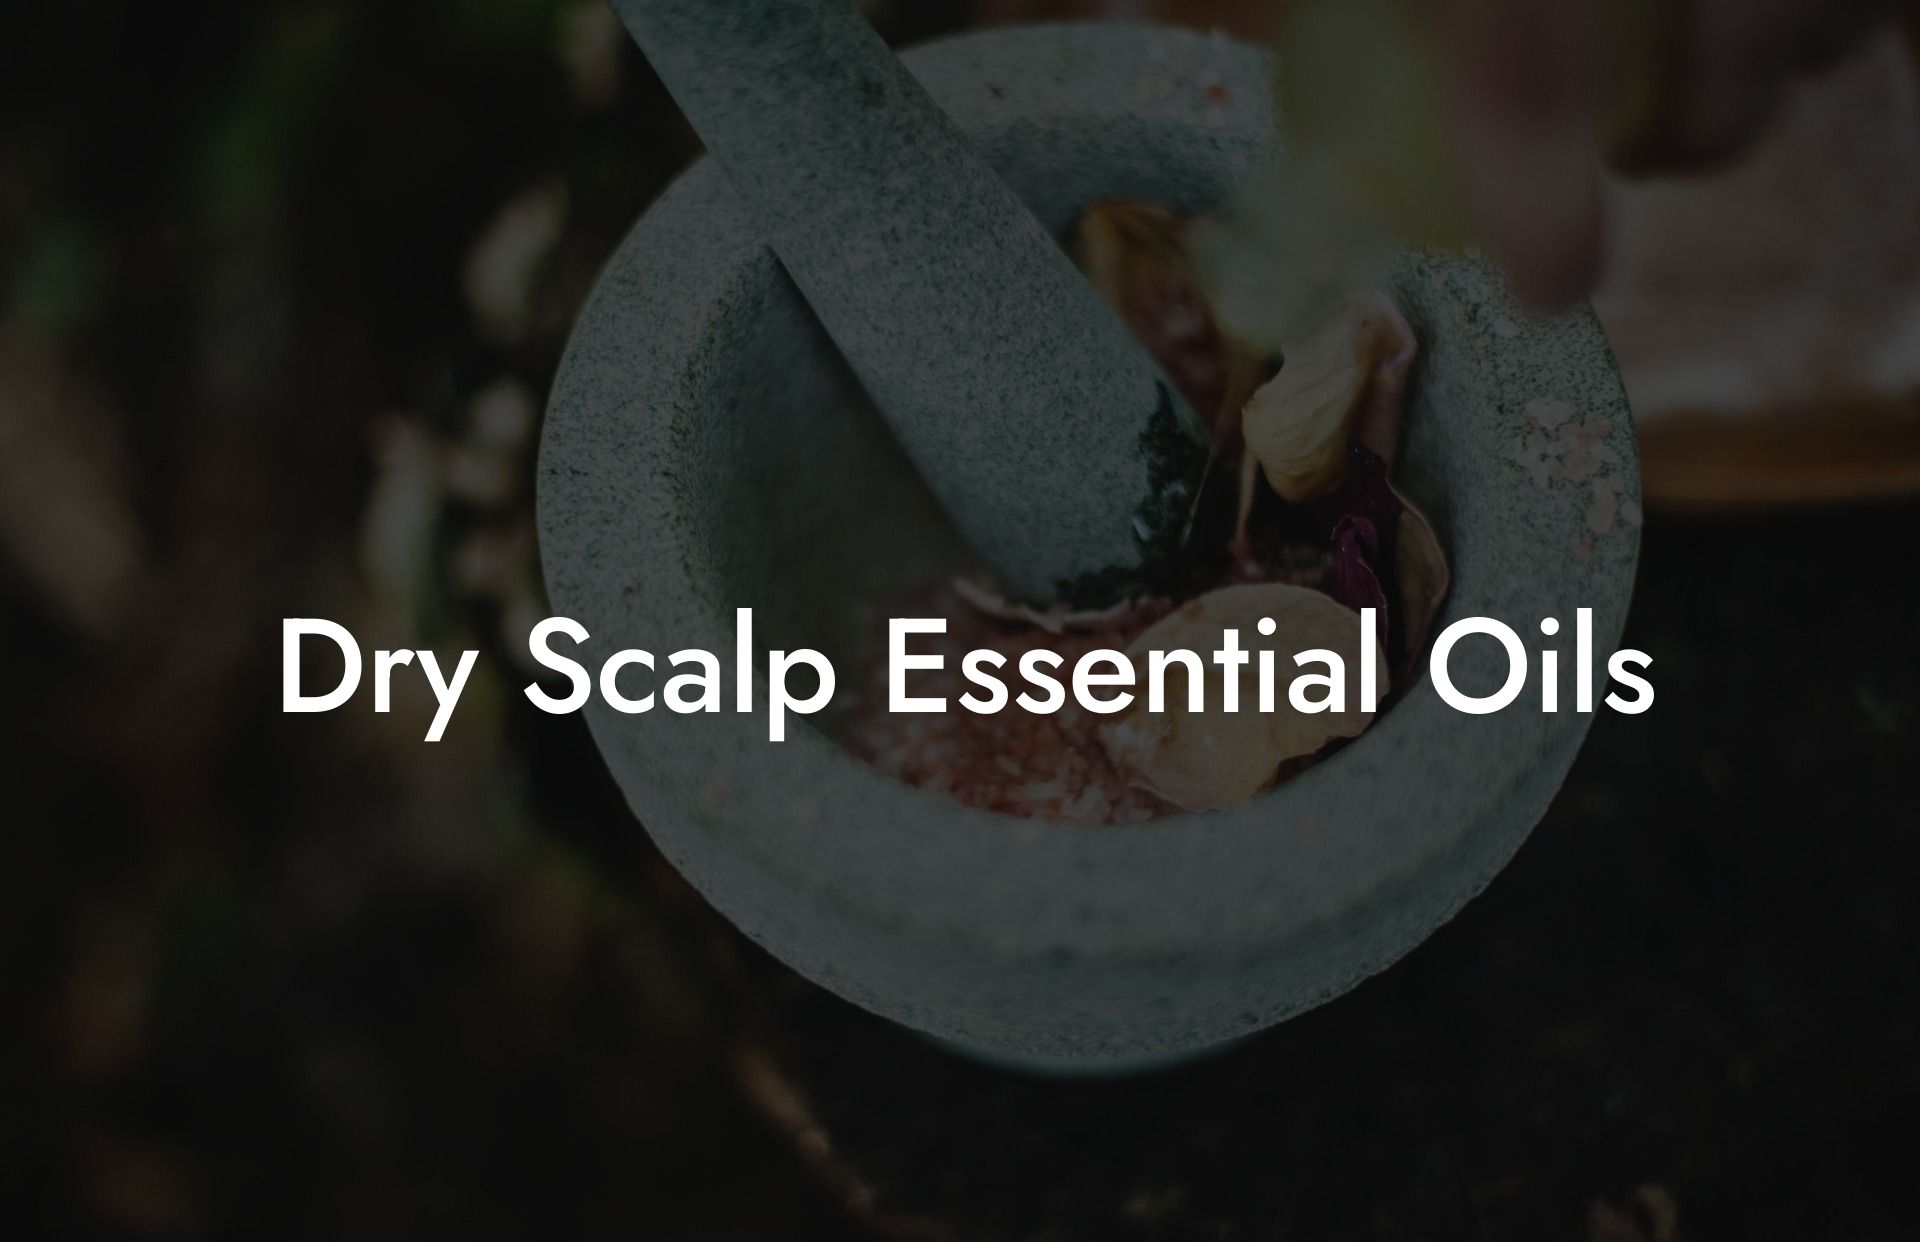 Dry Scalp Essential Oils